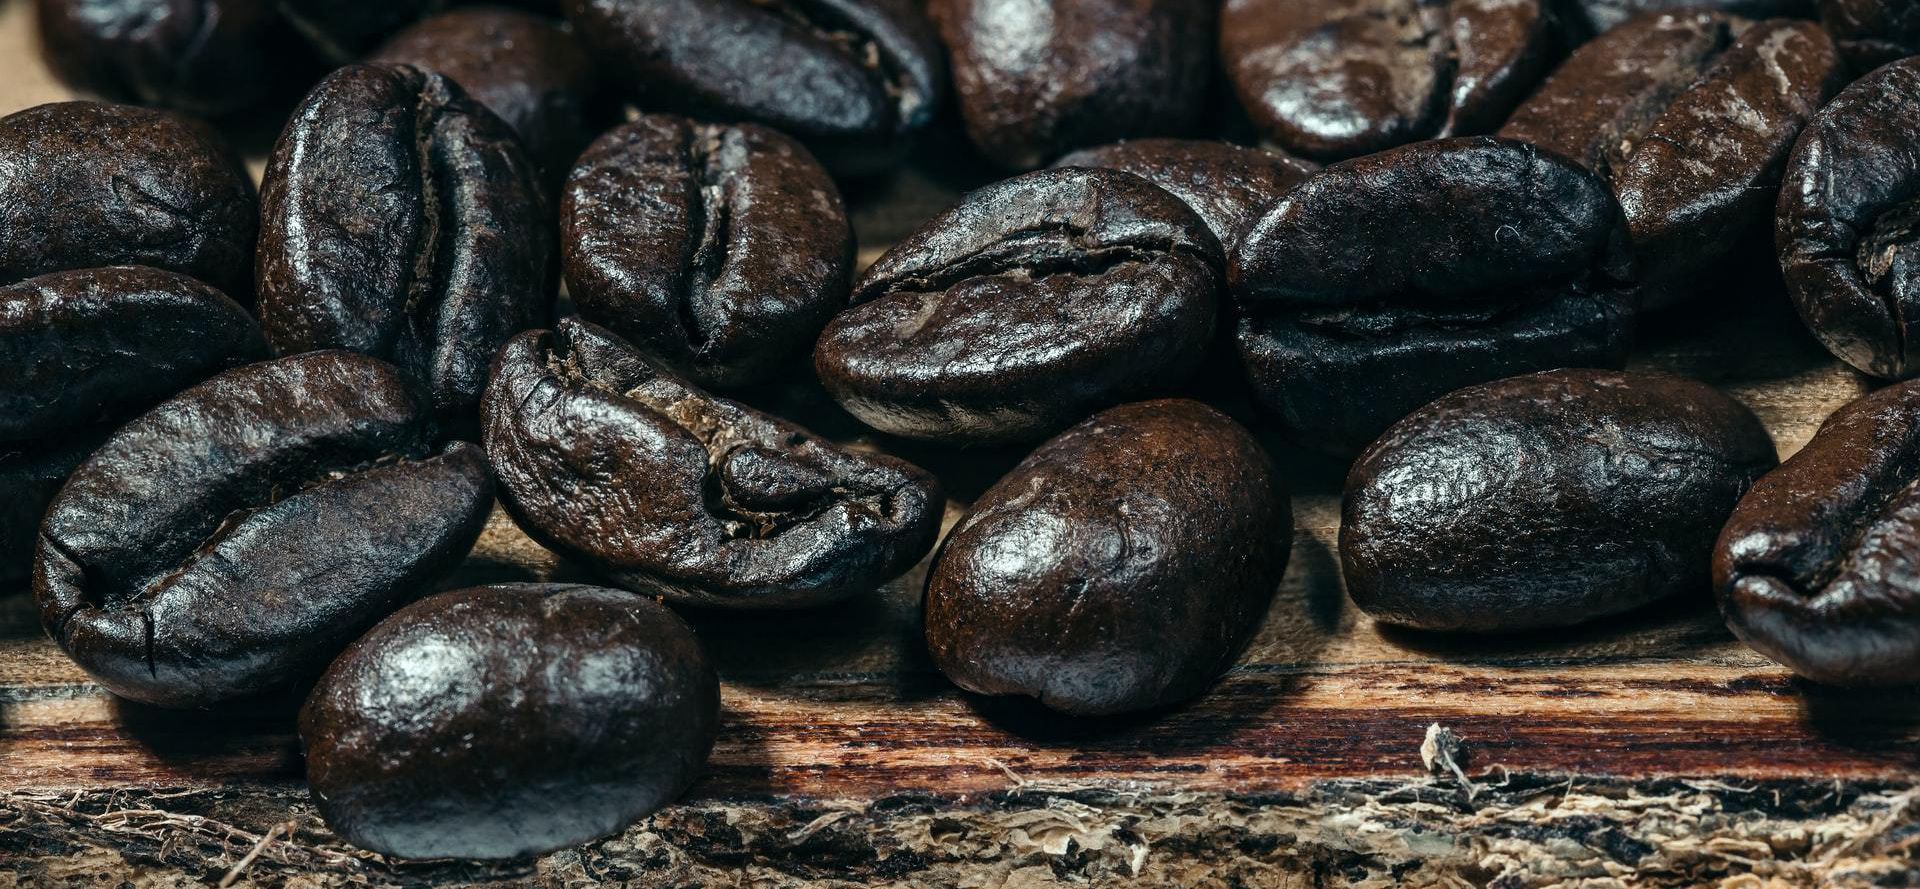 Dark roast coffee beans.